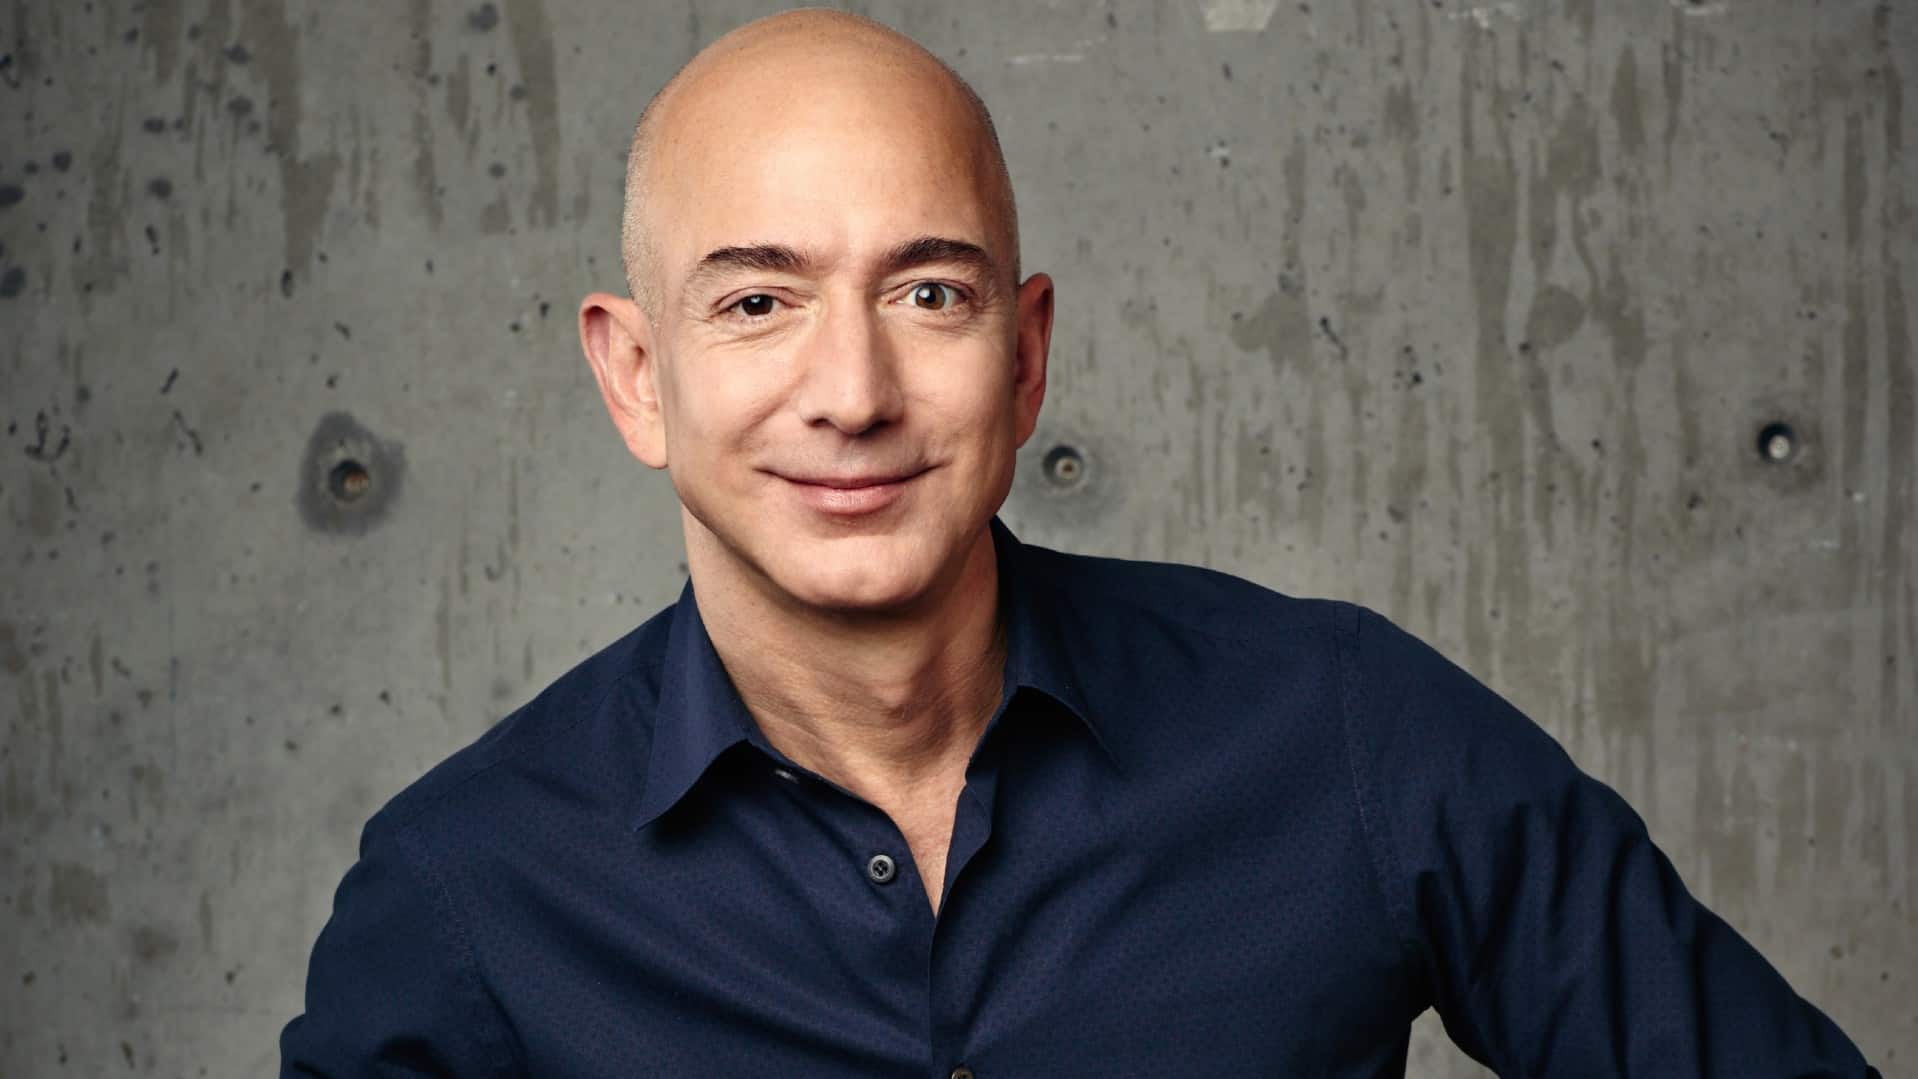 Headshot of Amazon CEO Jeff Bezos